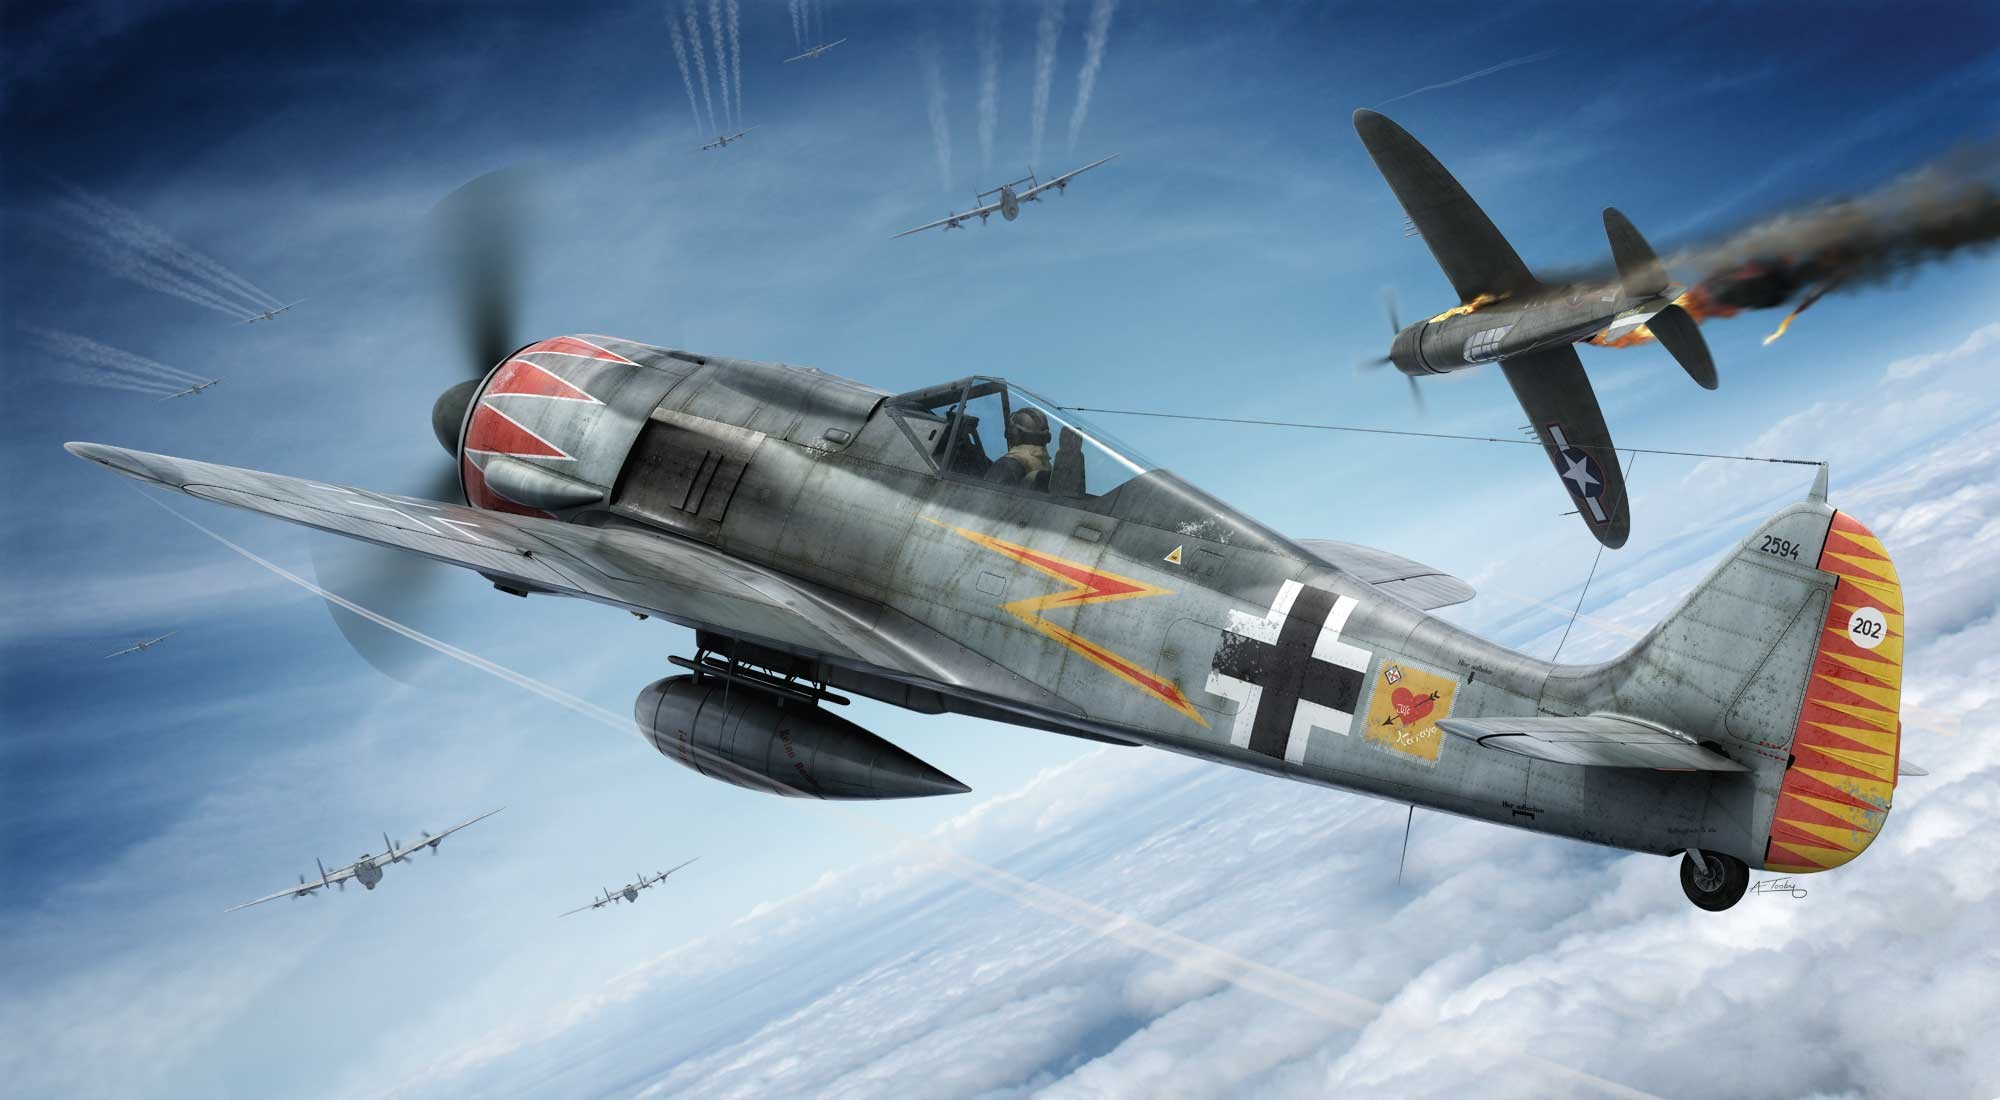 General 2000x1100 World War II Focke-Wulf Focke-Wulf Fw 190 airplane war aircraft military military aircraft German aircraft